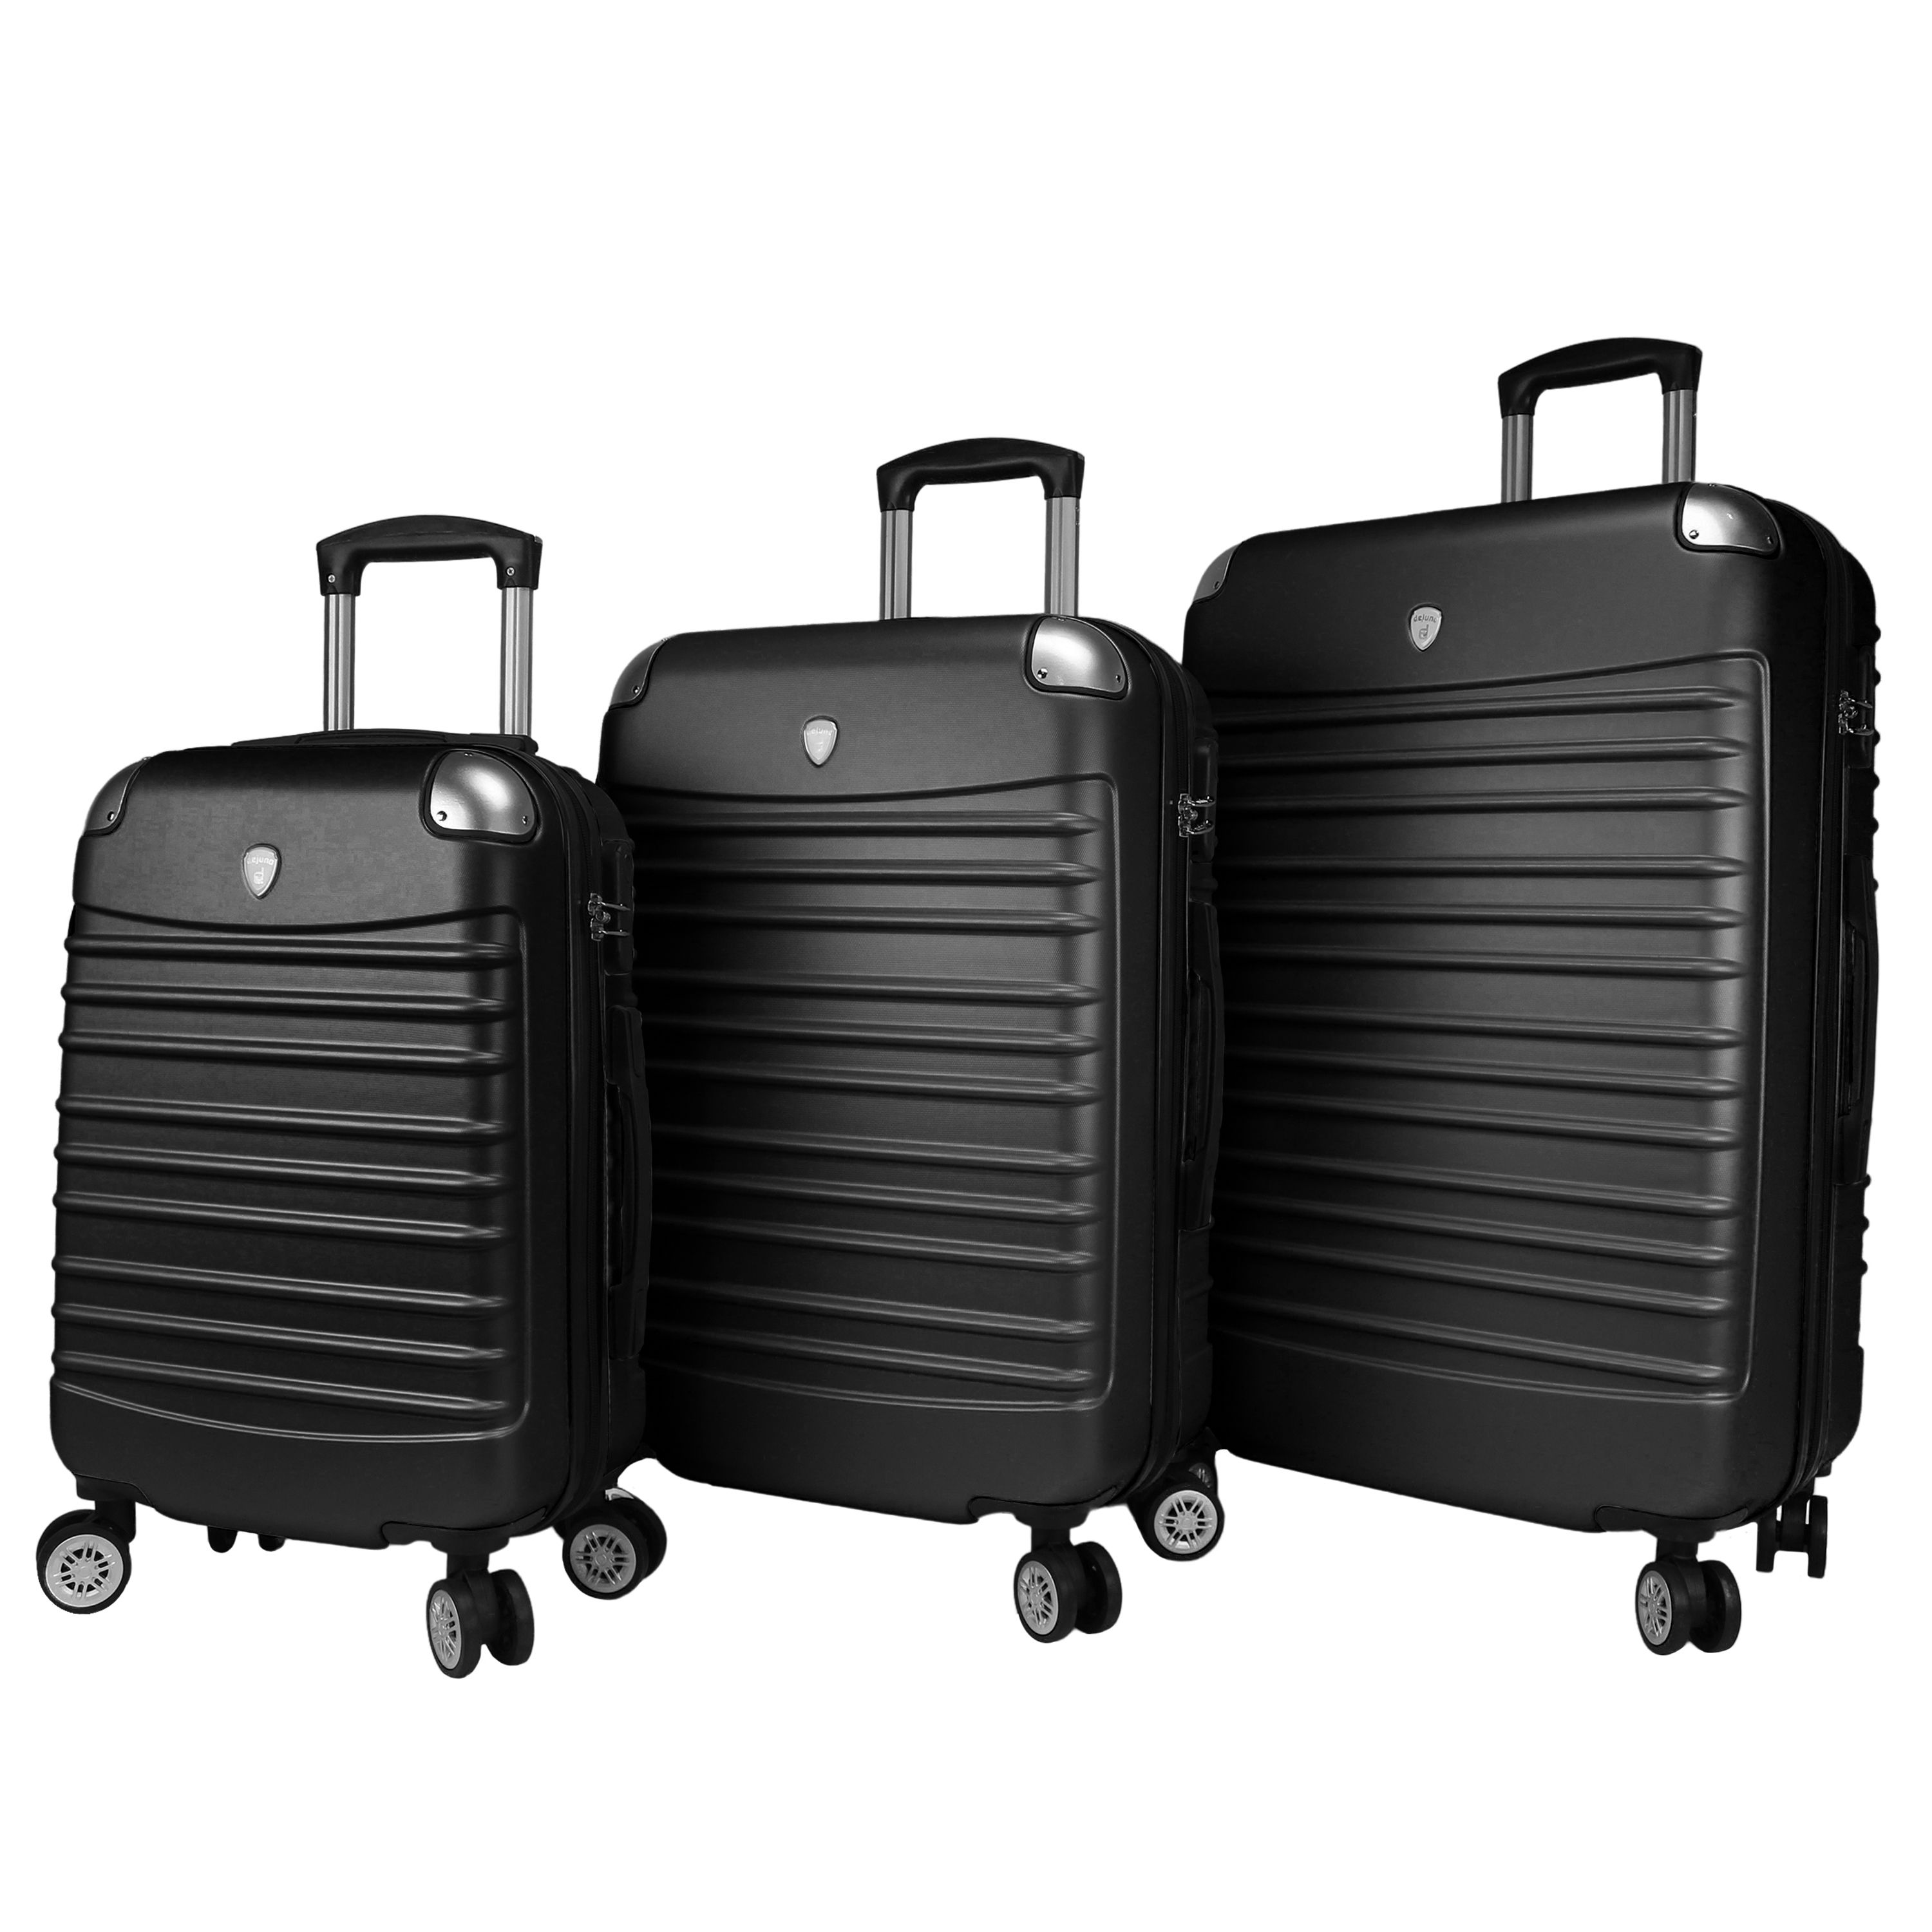 25dj-610-black Impact Hardside Spinner Luggage Set - Black, 3 Piece